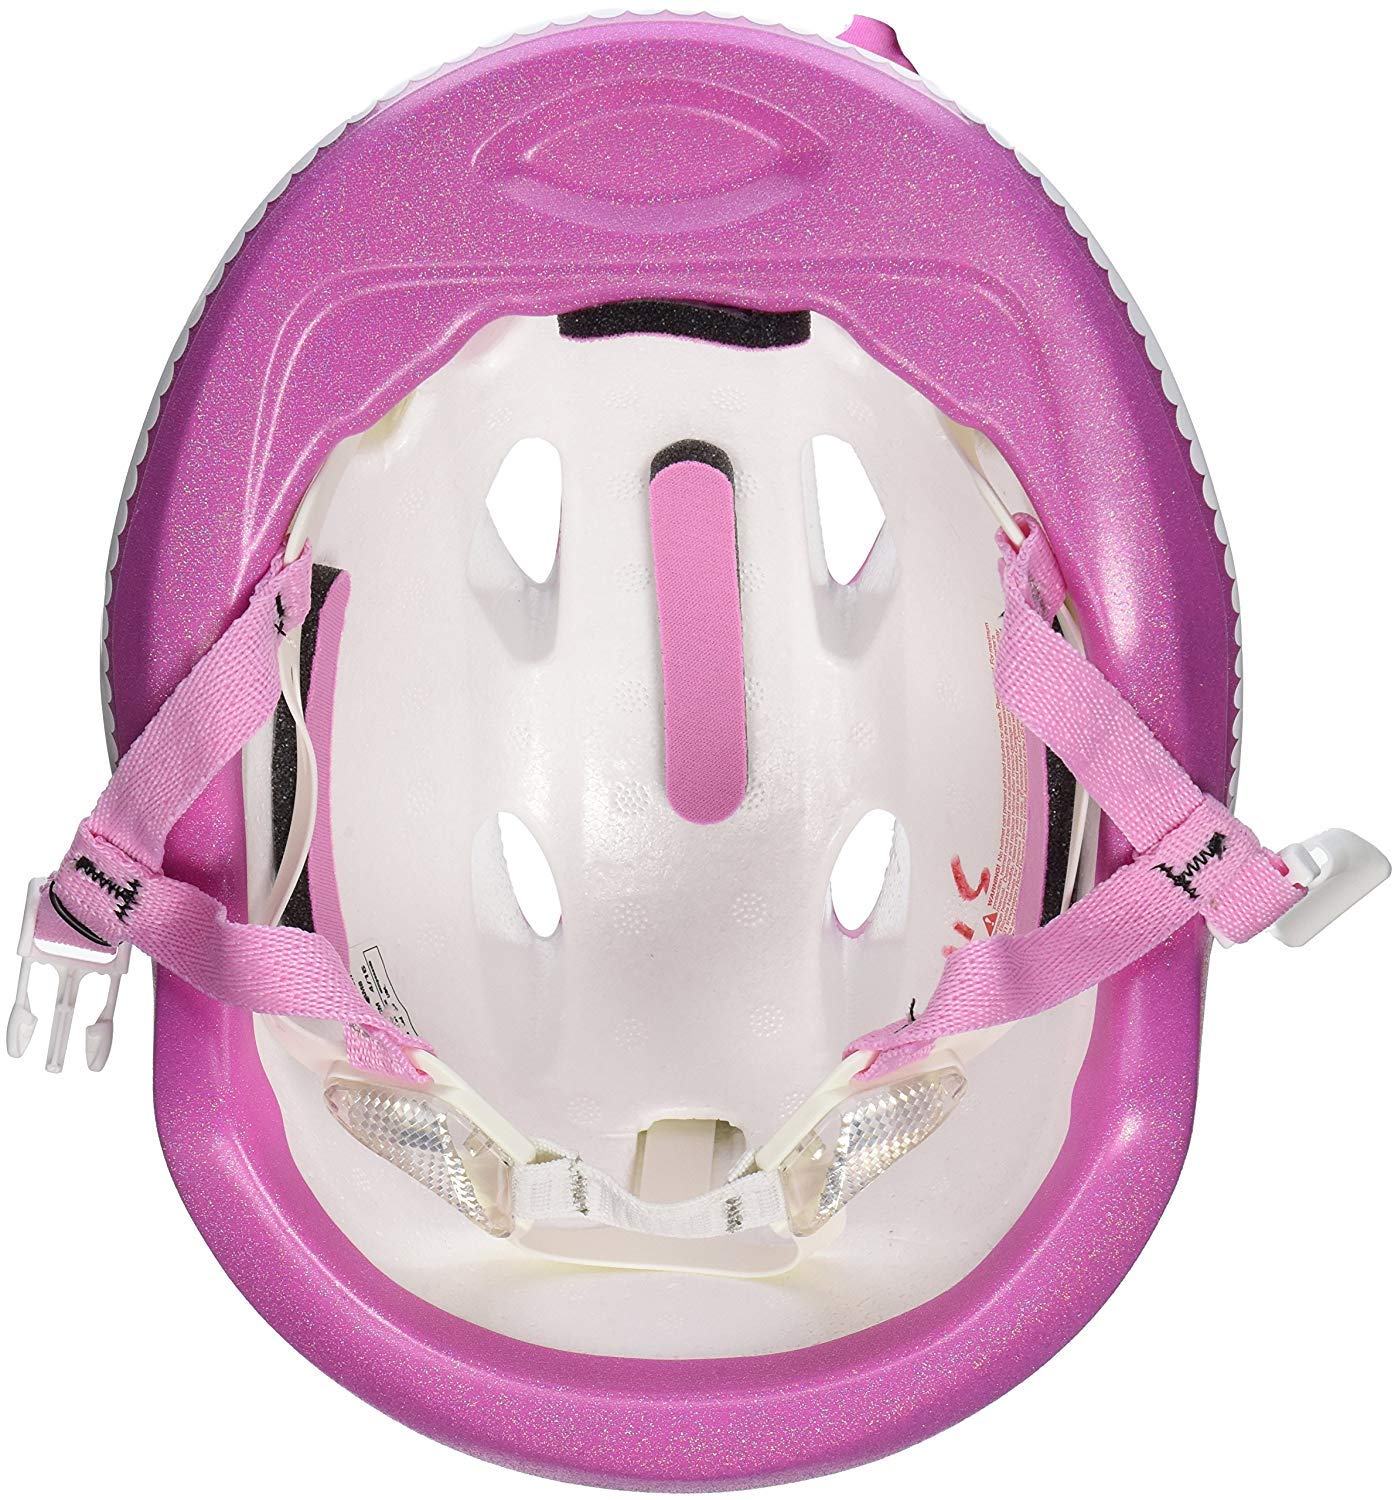 Disney Minnie Mouse Toddler Bike Helmets